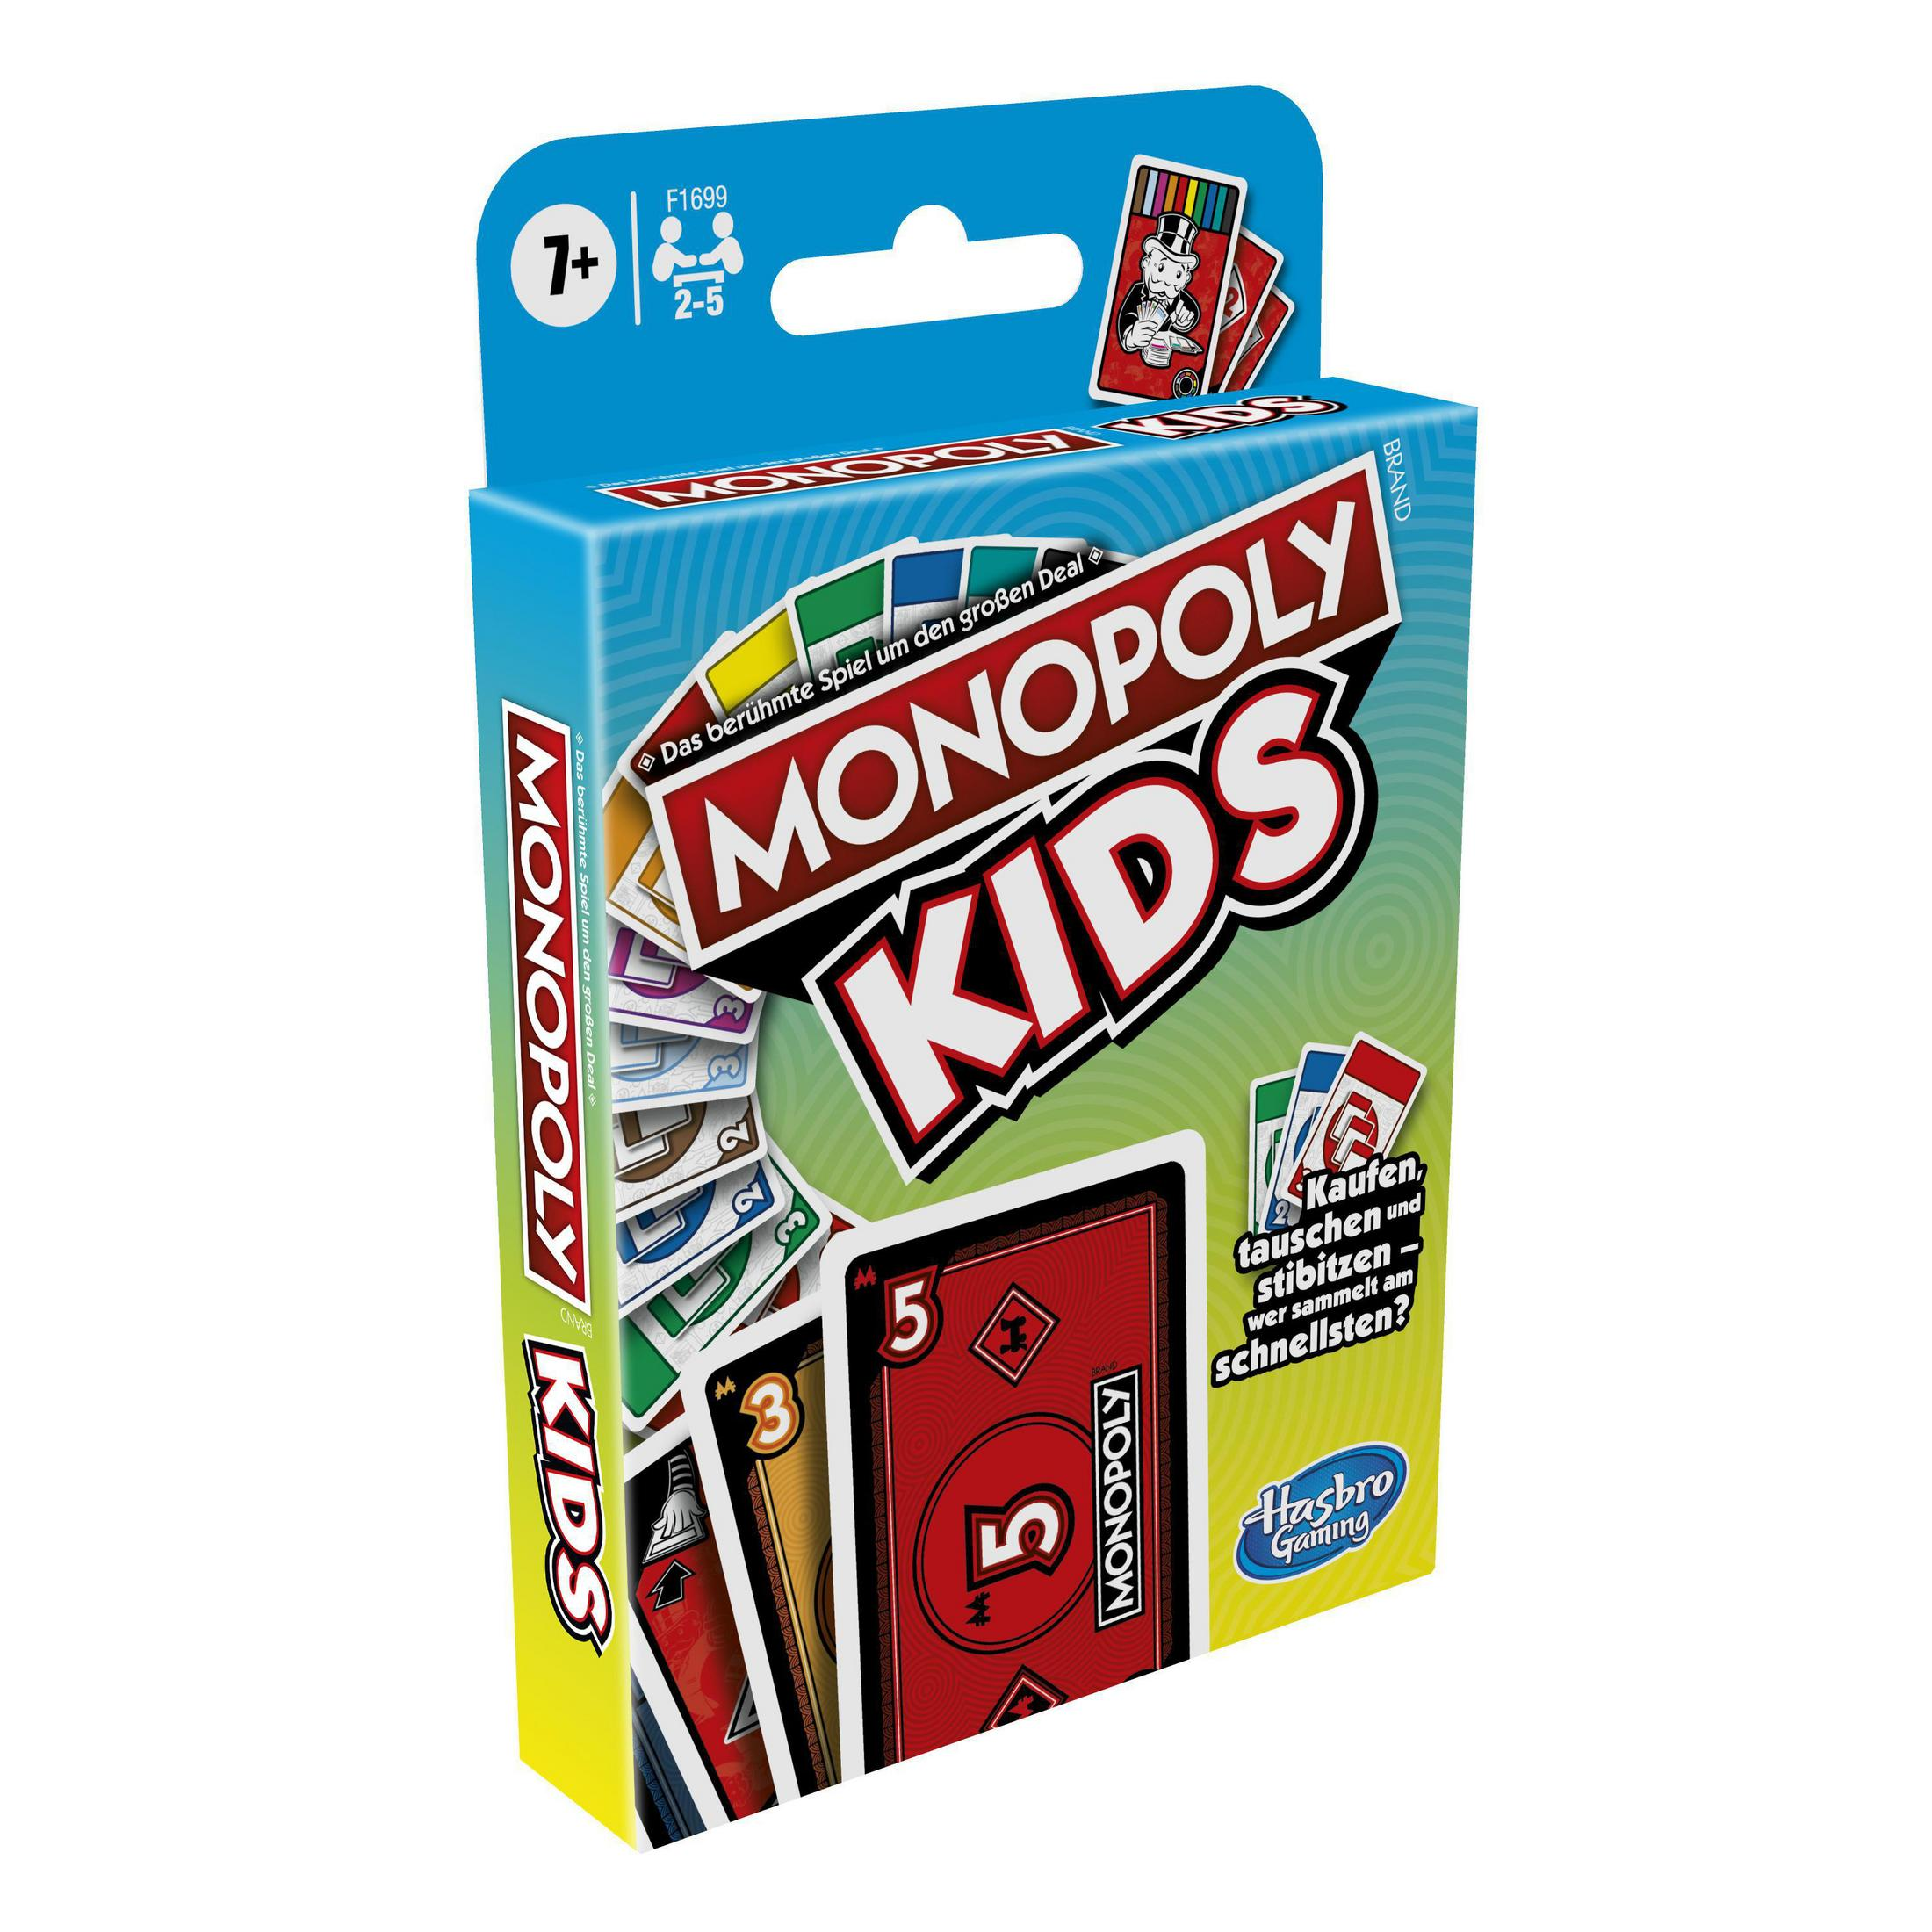 HASBRO GAMING F1699100 MONOPOLY KIDS Kartenspiel KARTENSPIEL